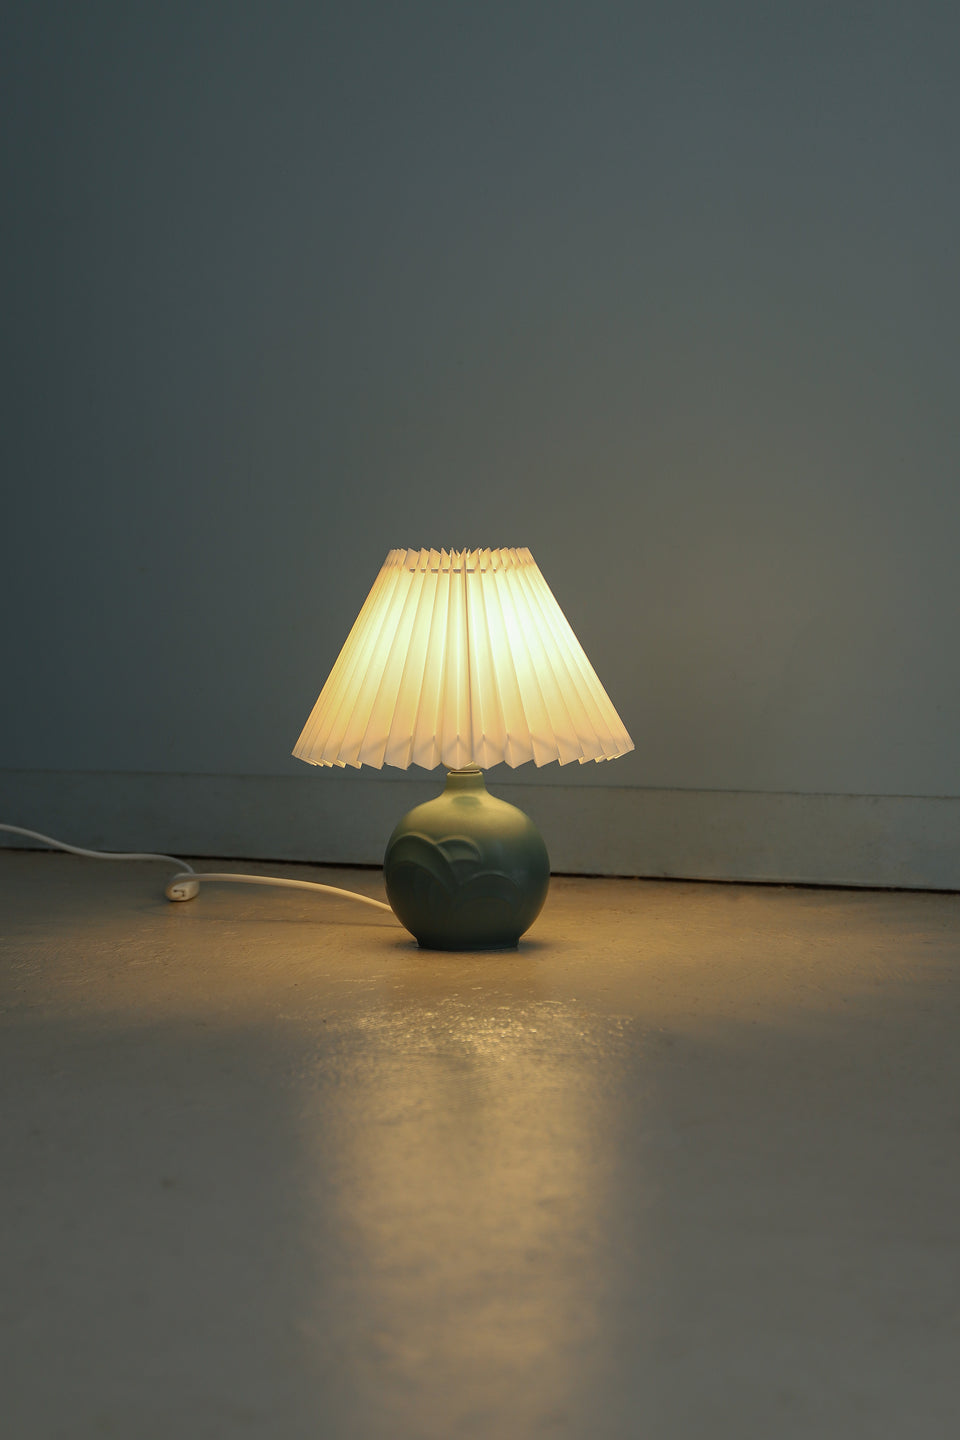 Søholm Table Lamp NR.1285-0 Danish Vintage/デンマークヴィンテージ スーホルム テーブルランプ 間接照明 北欧インテリア